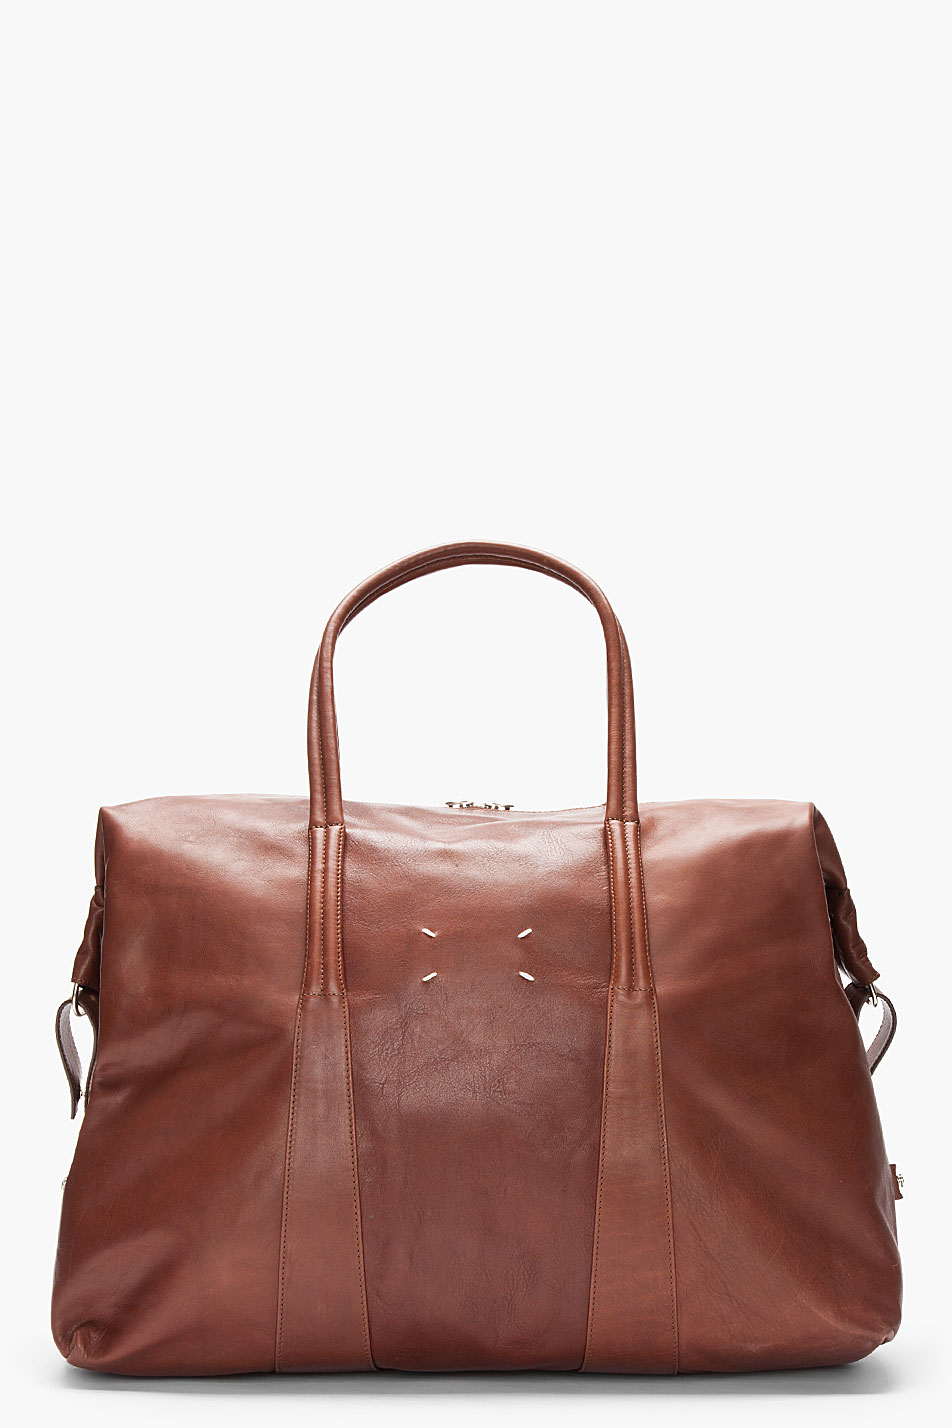 Maison Martin Margiela Brown Leather Travel Duffel Bag Calfskin